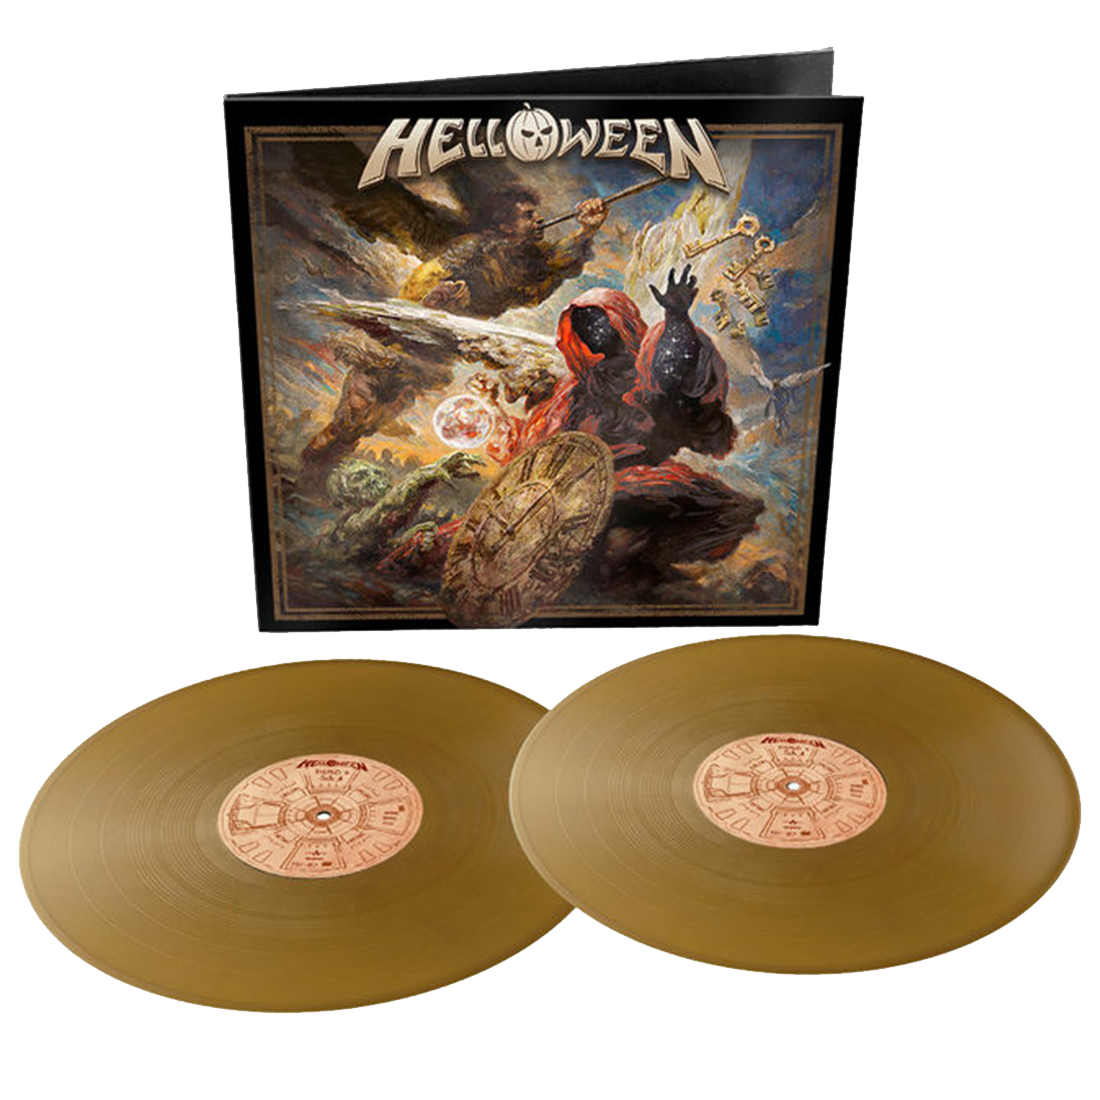 Helloween: Limited Edition Gatefold Gold Vinyl 2LP